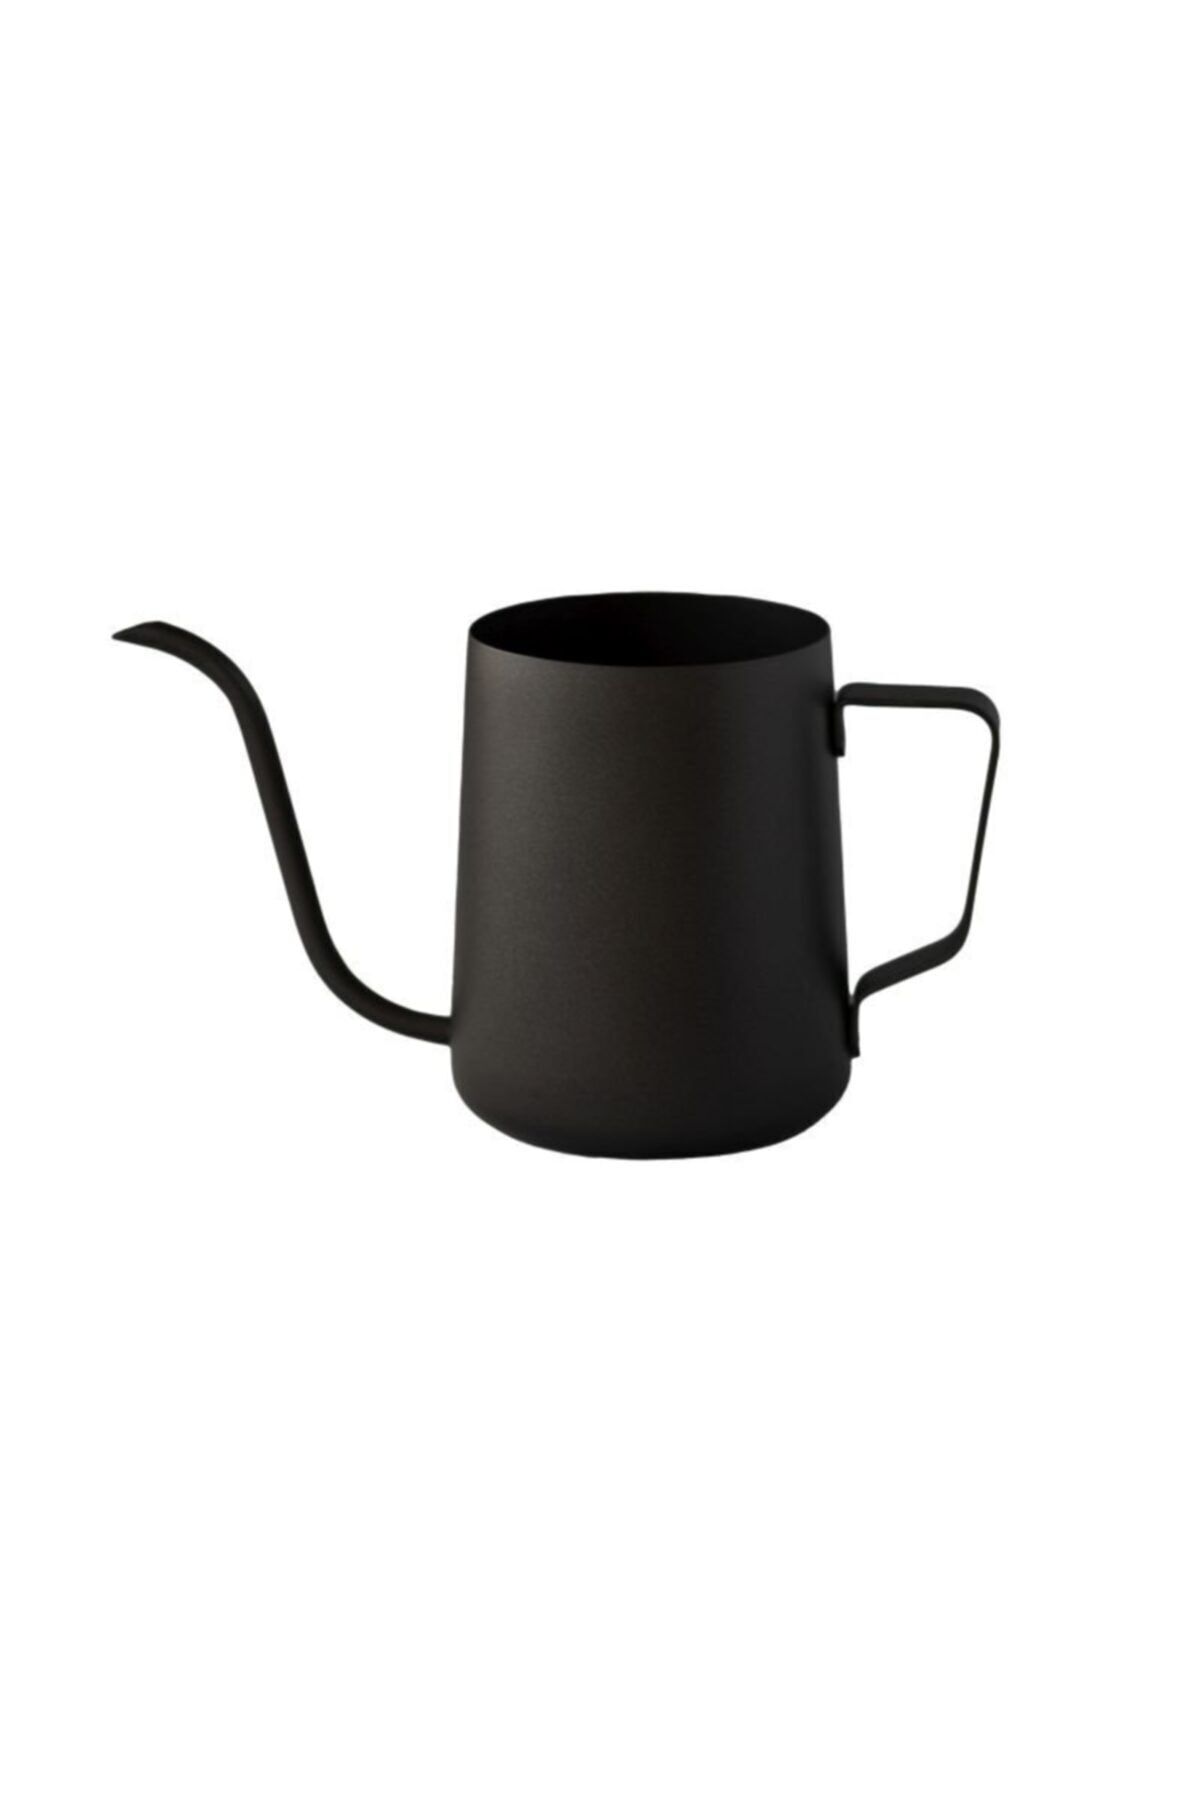 COLDBREWTREND Mini Drip Kettle - 600ml - Kahve Demleme Ibriği